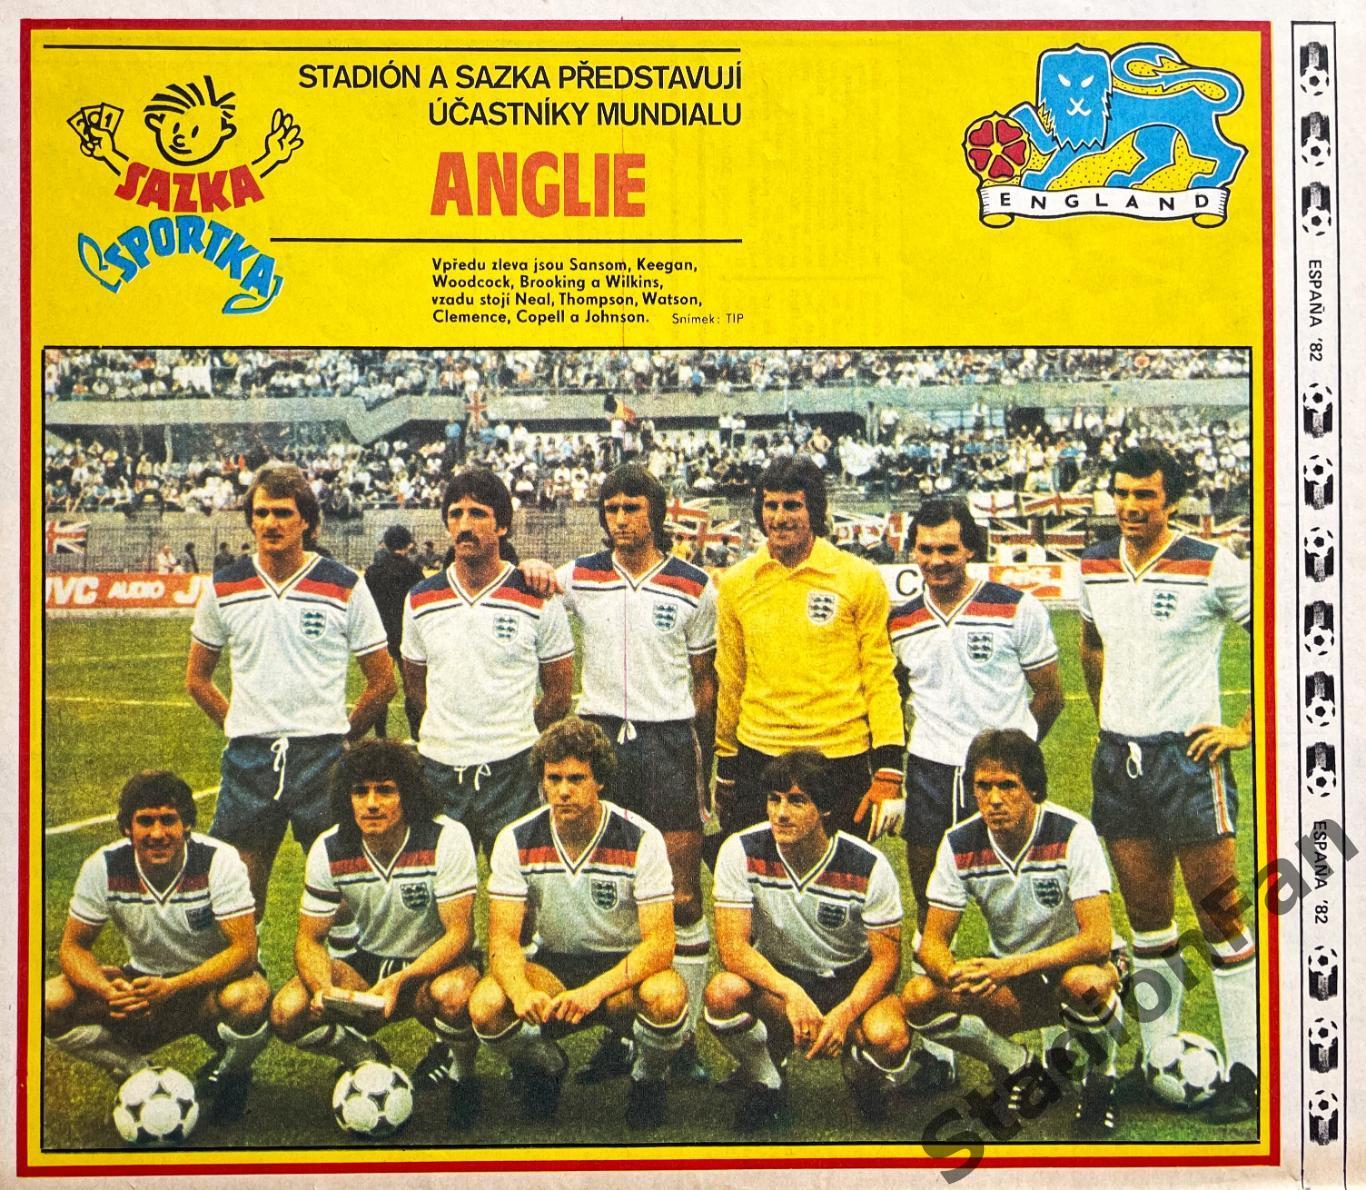 Постер из журнала Stadion (Стадион) - Anglie 1982